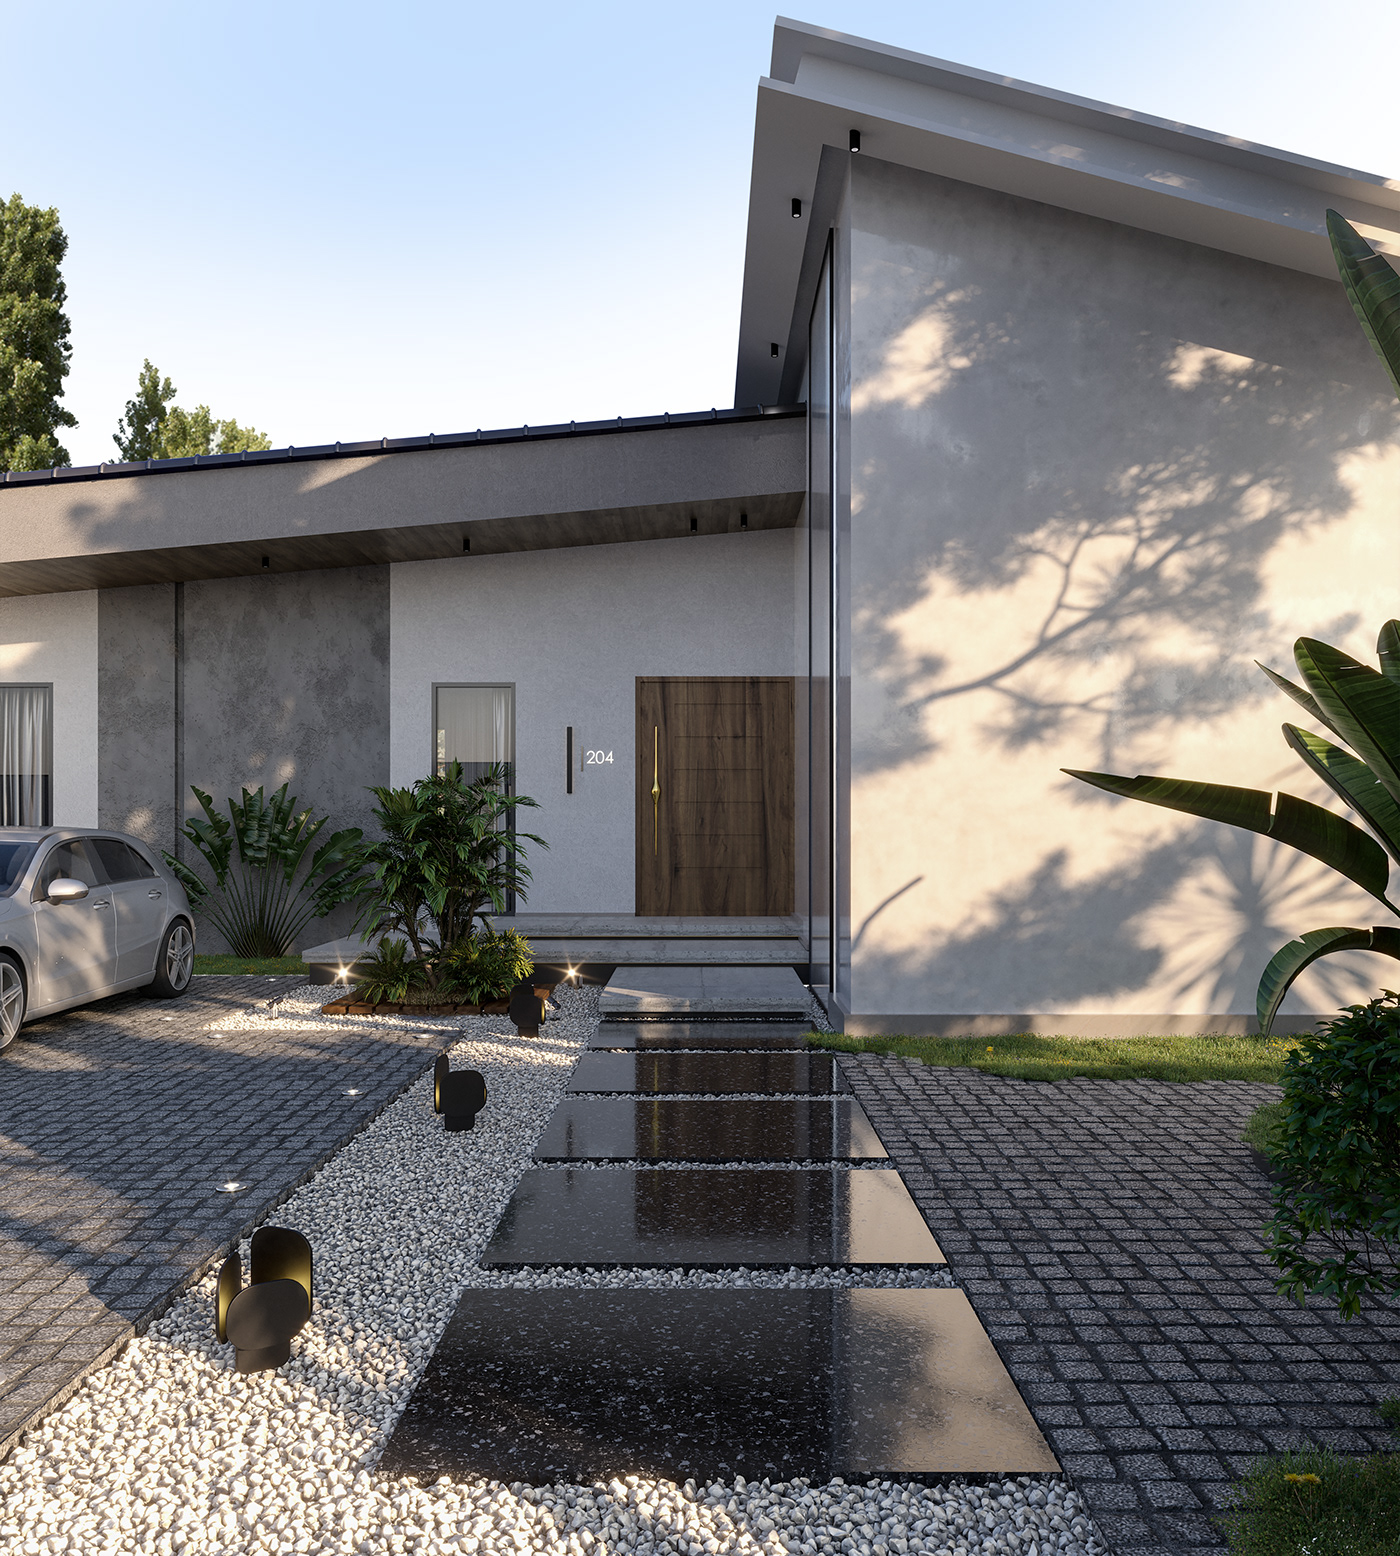 3ds max architecture corona Landscape lighting modern Render SKY villa design visualization